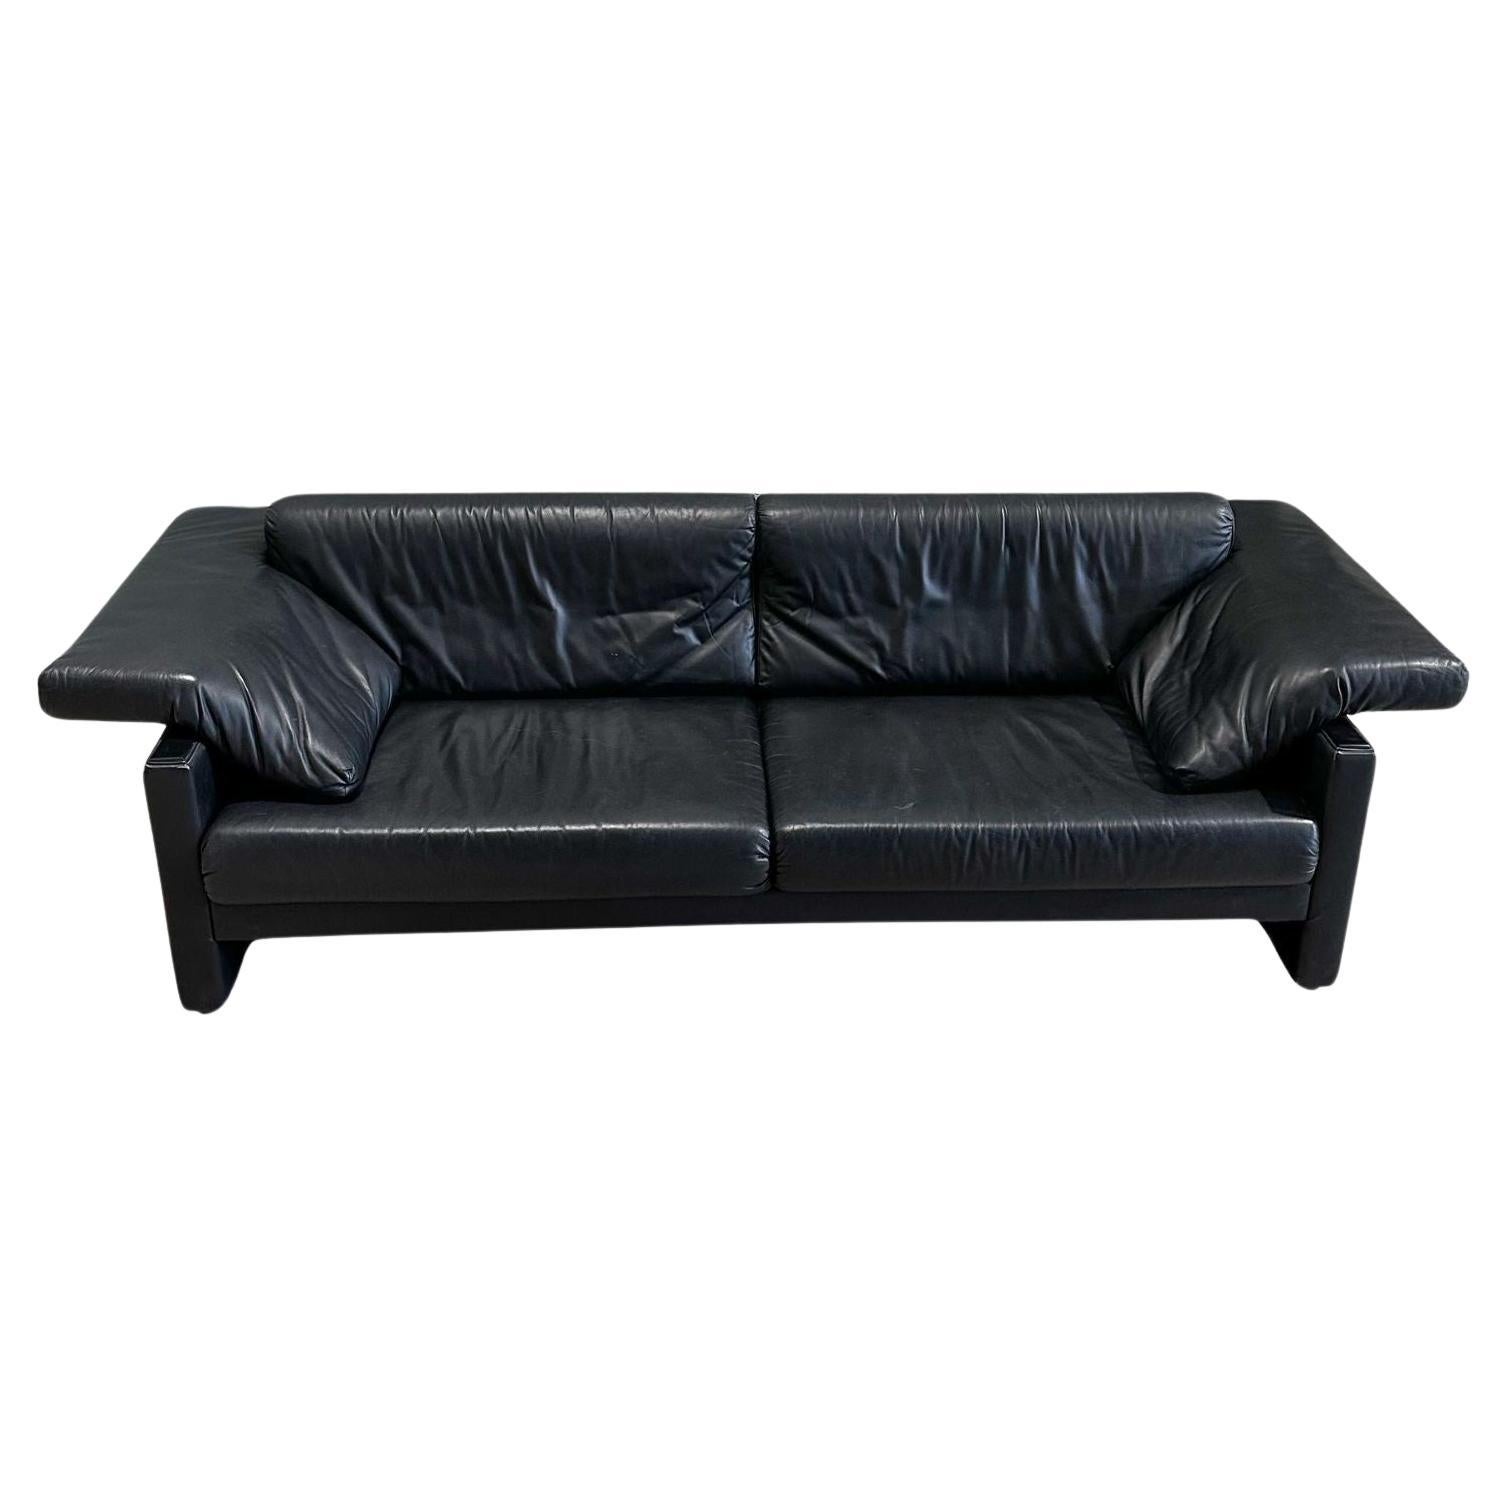 W. K. Wohnen Post Modern Black Leather Sofa, Germany 1980 For Sale